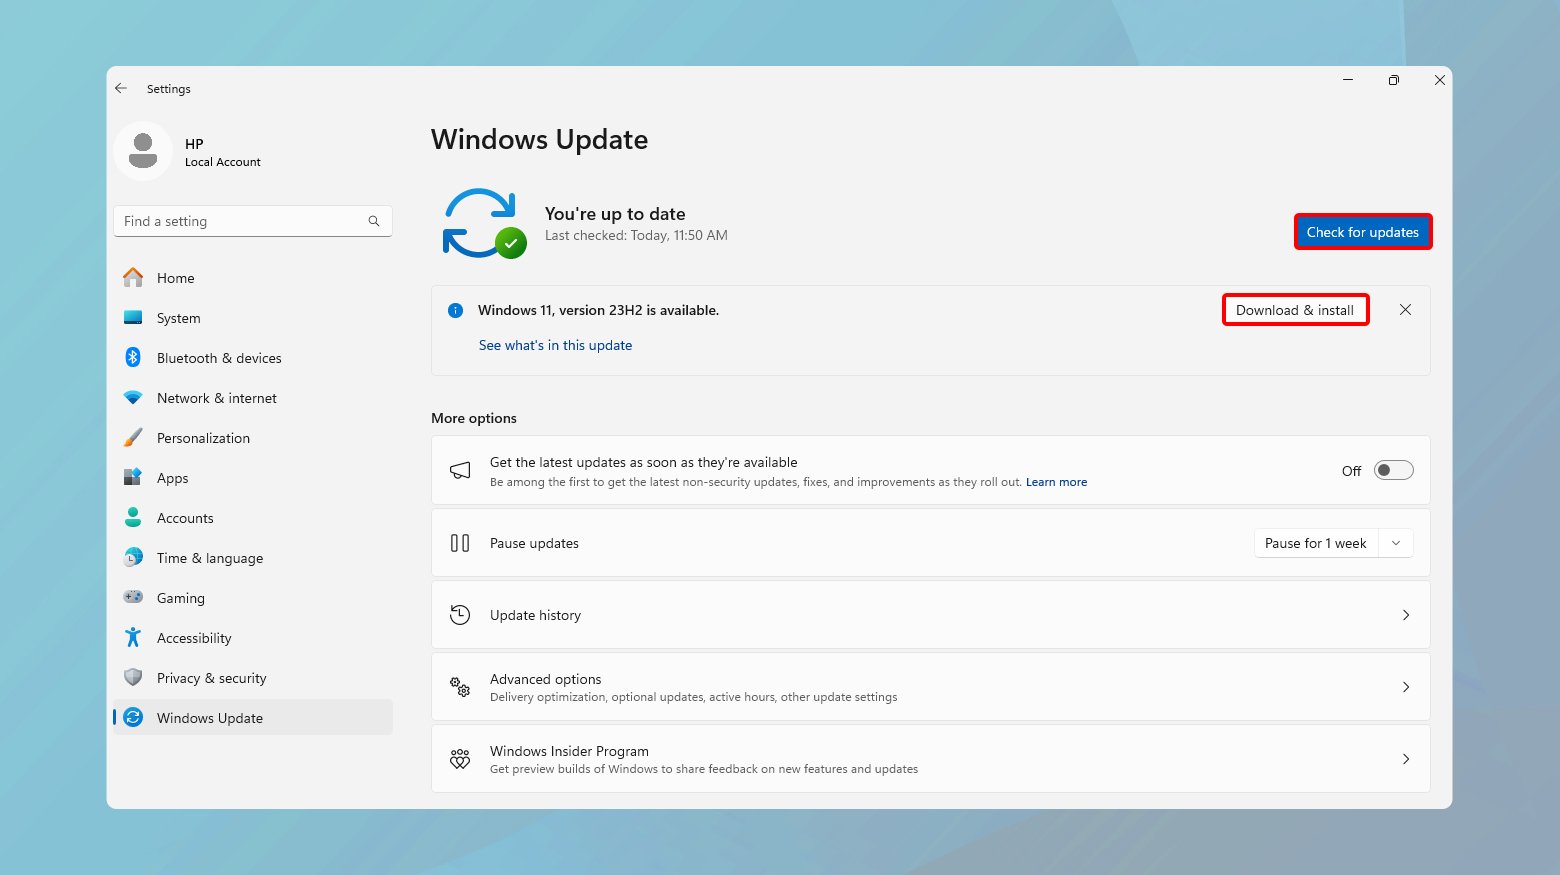 Windows update page in windows settings.